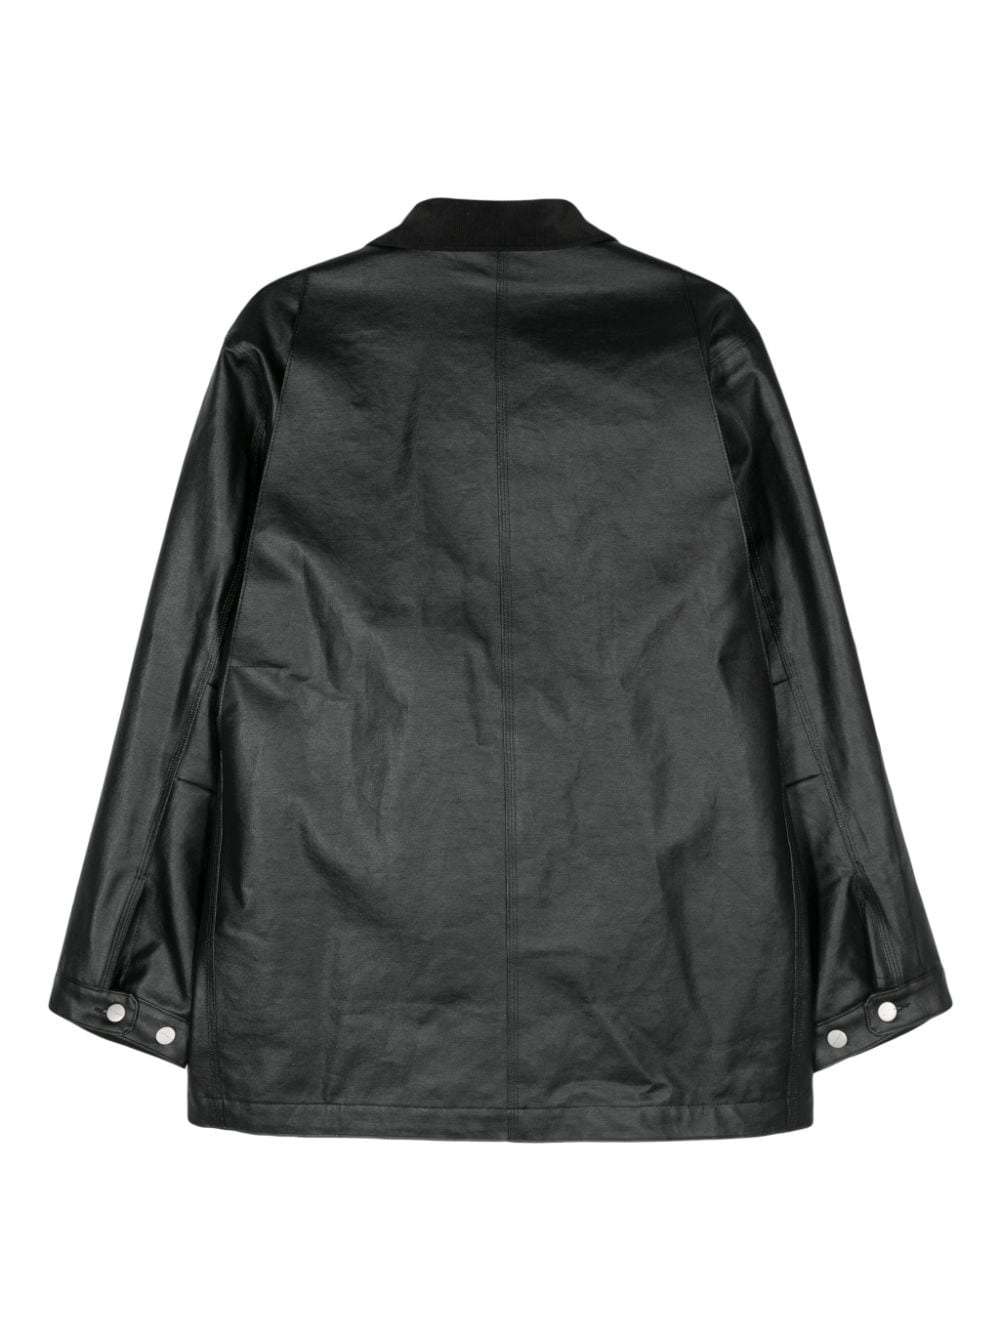 x Carhartt canvas shirt jacket - 2